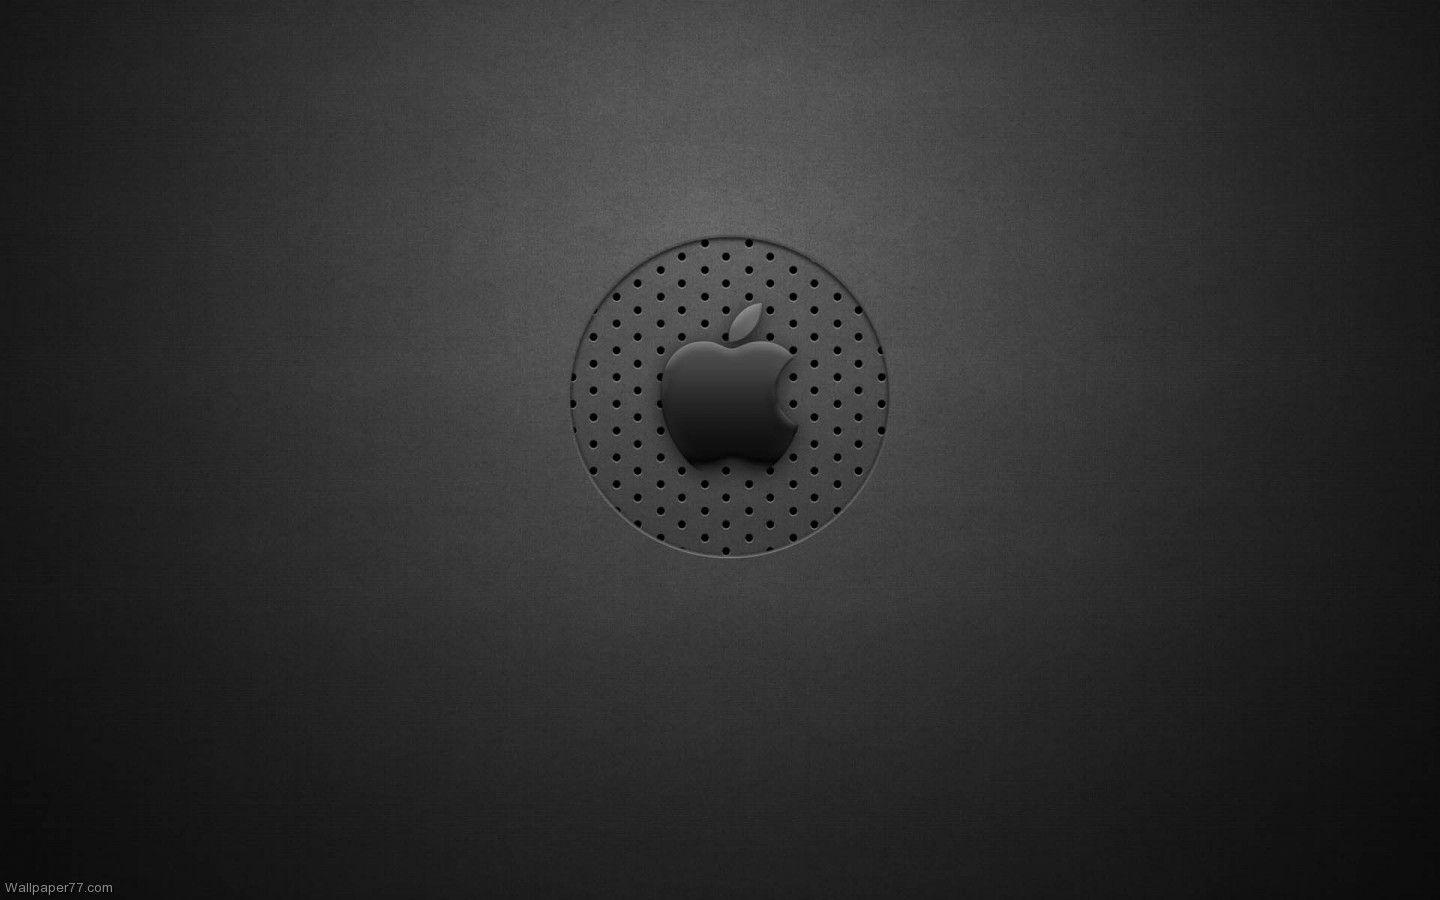 Grey Apple Logo, 1440x900 pixels, Wallpaper tagged Apple